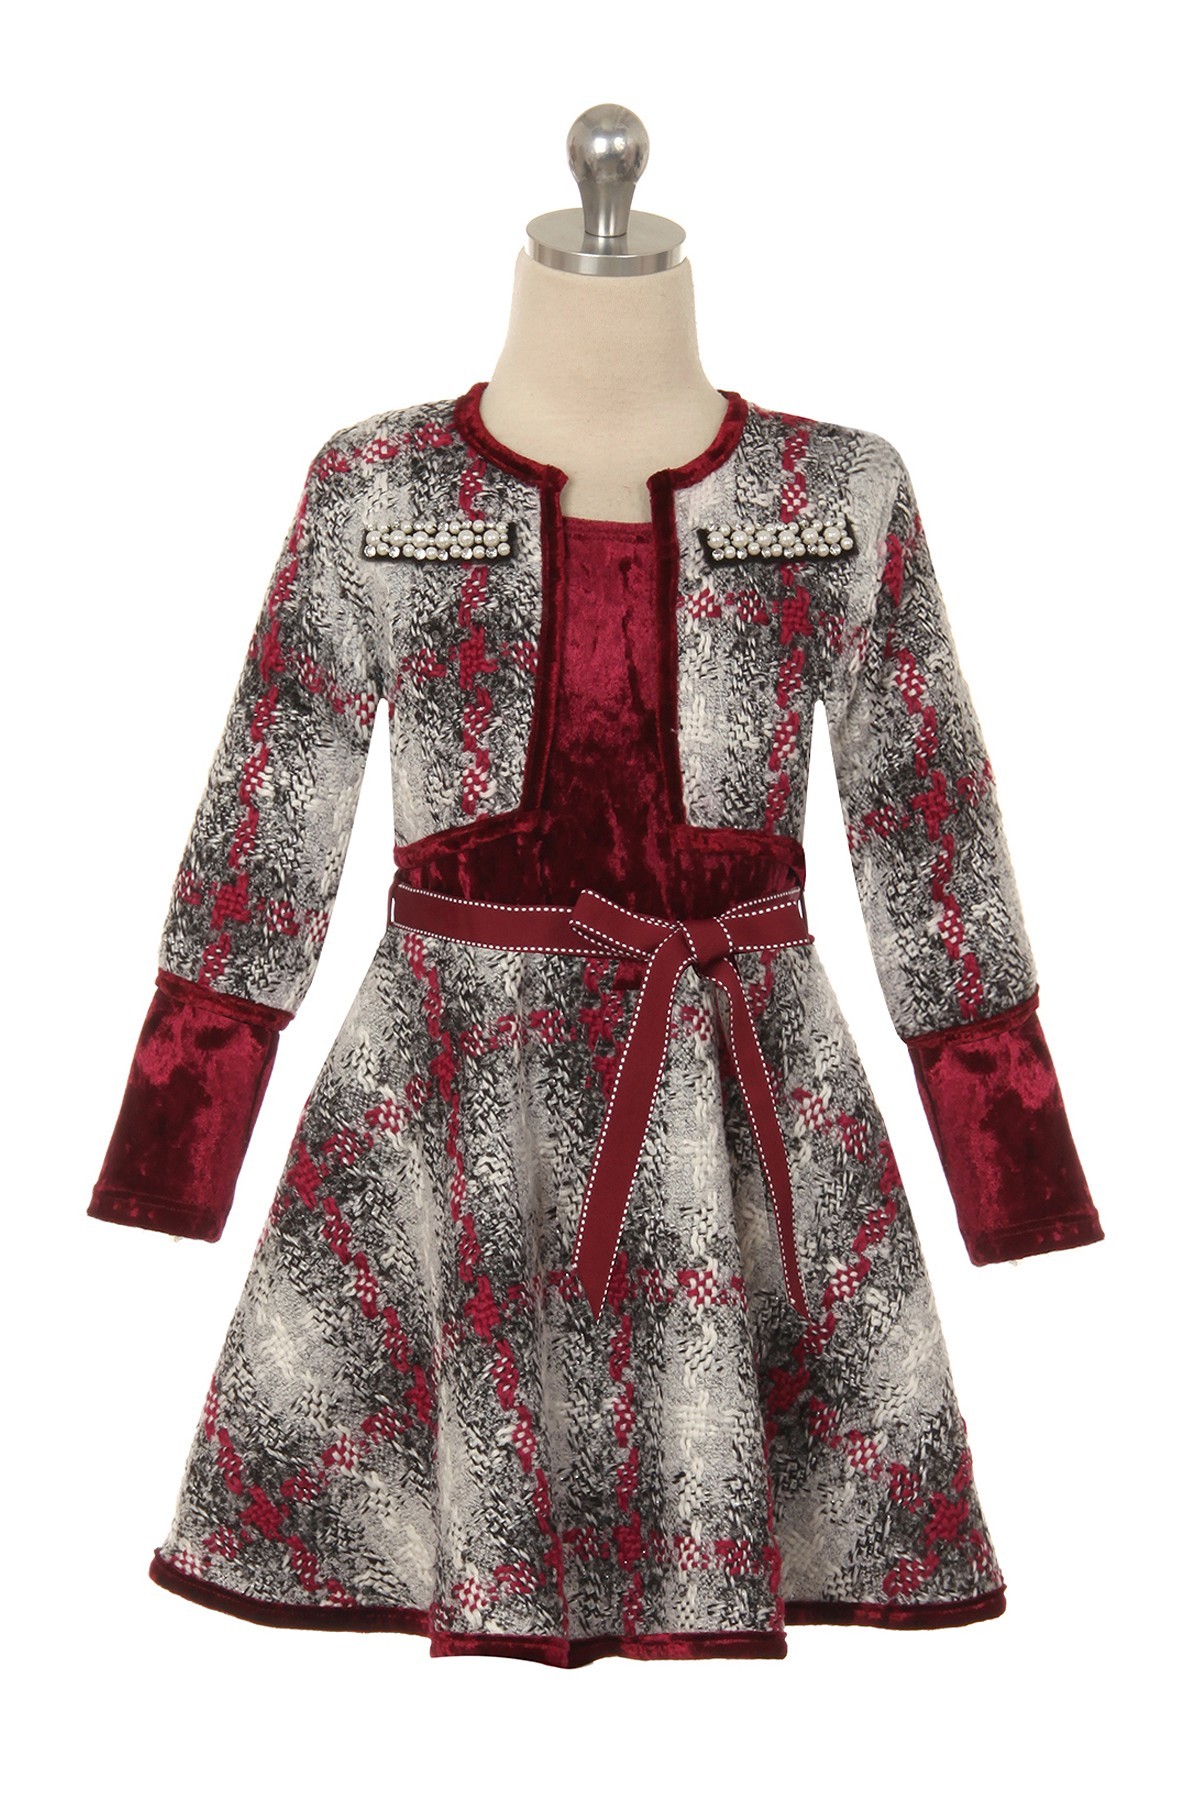 Dress for winter in this burgundy plaid skirt & jacket dress with velvet top.